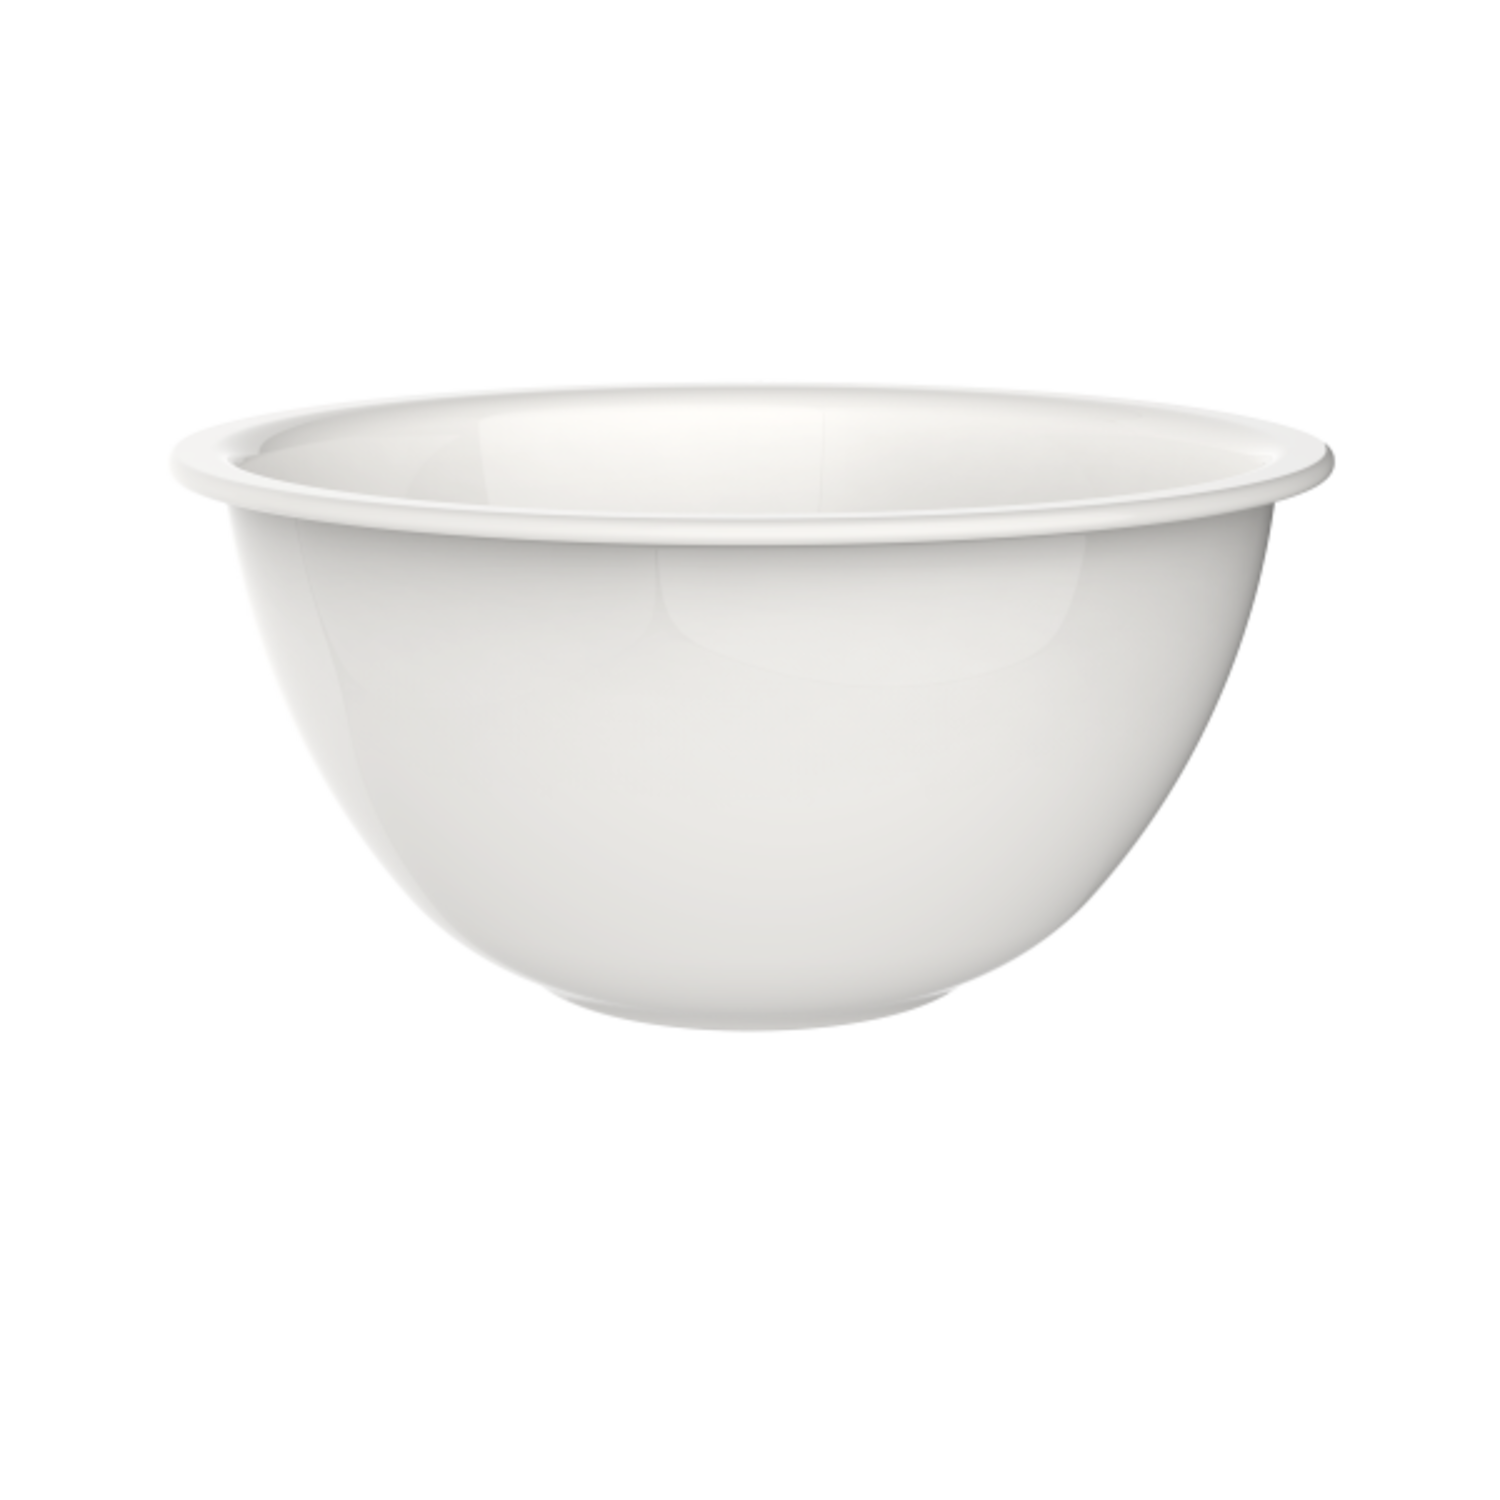 NUTRIUPS Large Glass Mixing Bowl, Large Salad Bowl for Serving (5 QT)